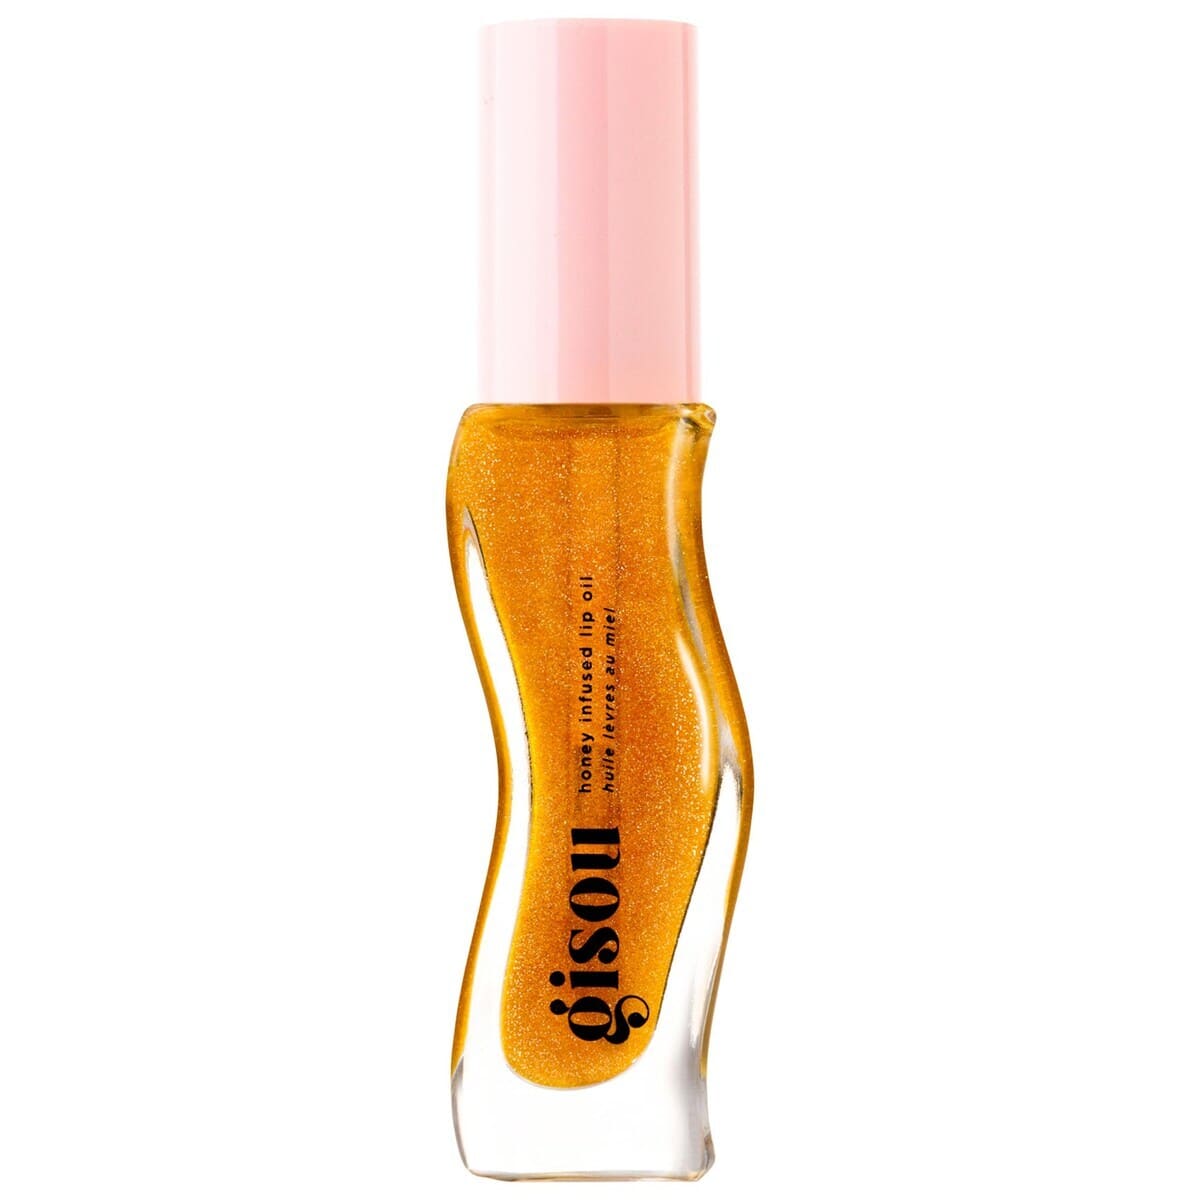 Gisou Honey Infused Lip Oil from Sephora